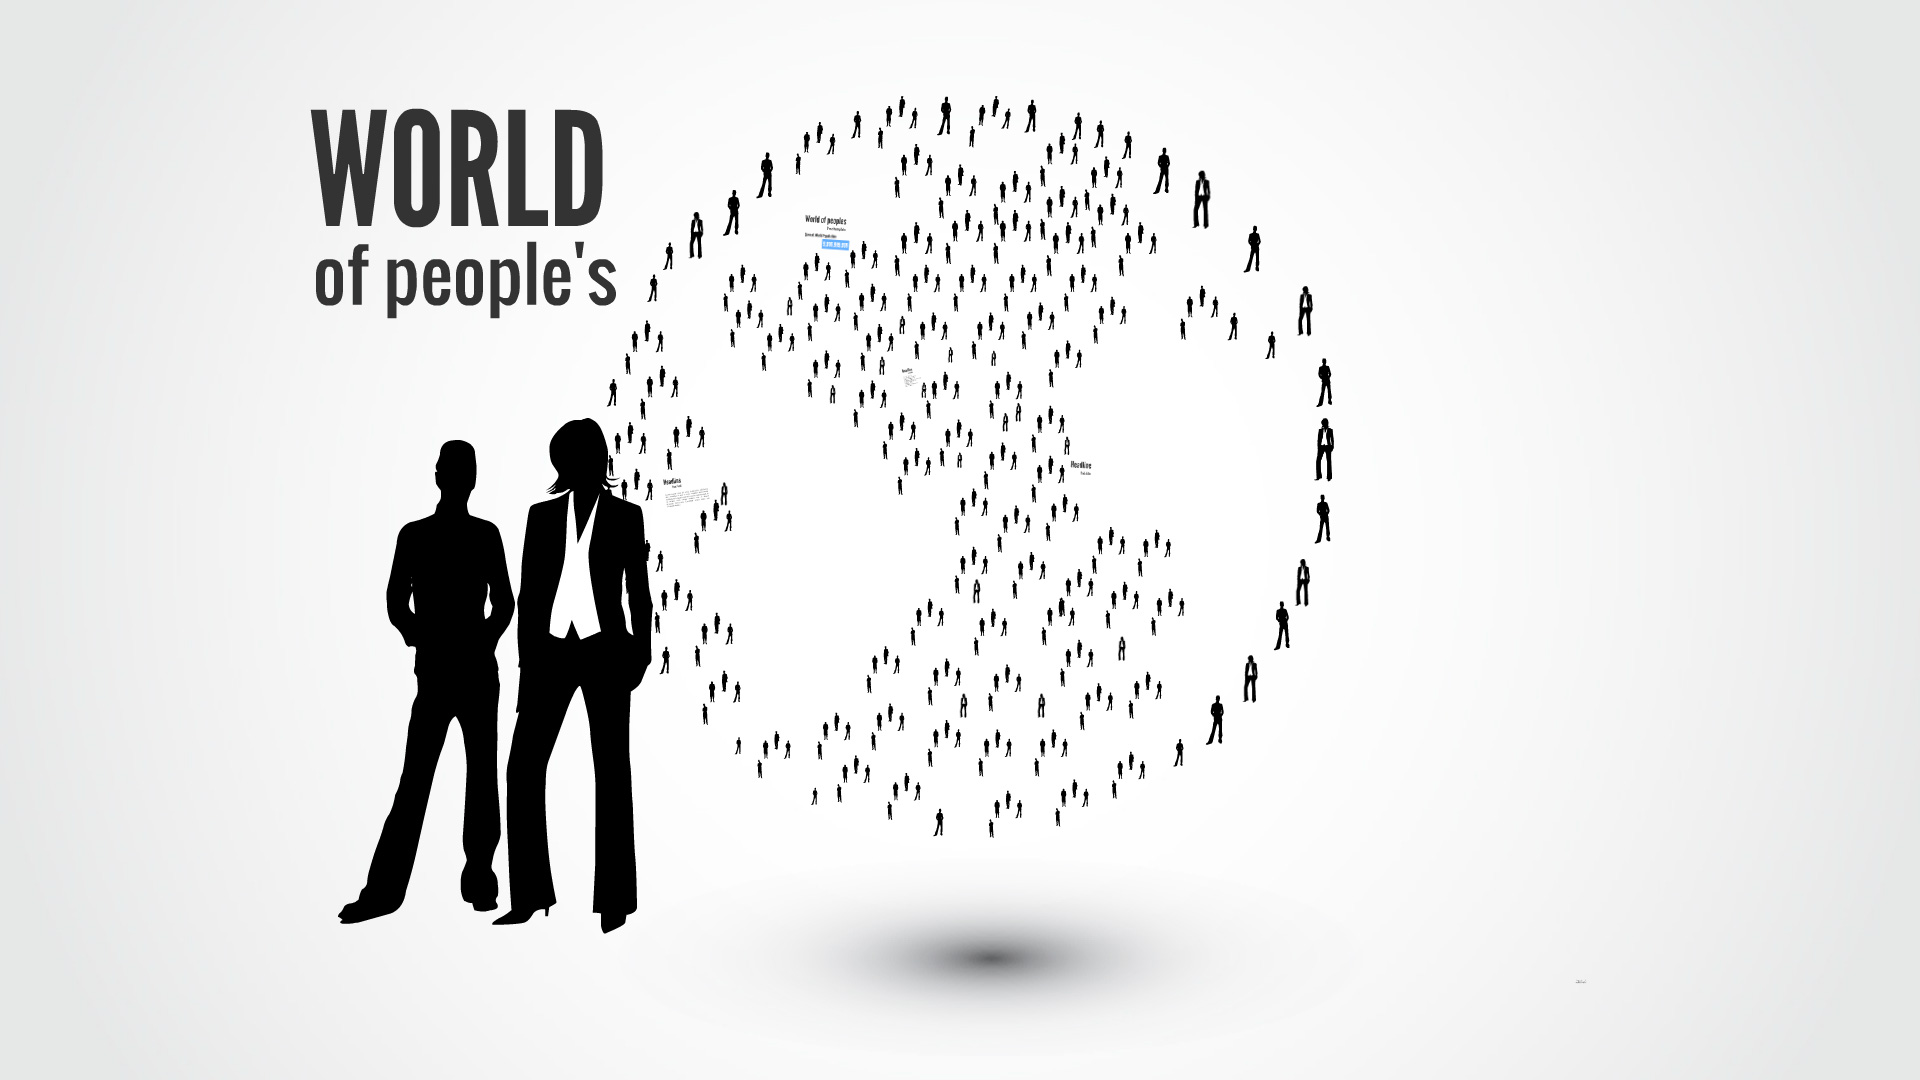 World of peoples Prezi template